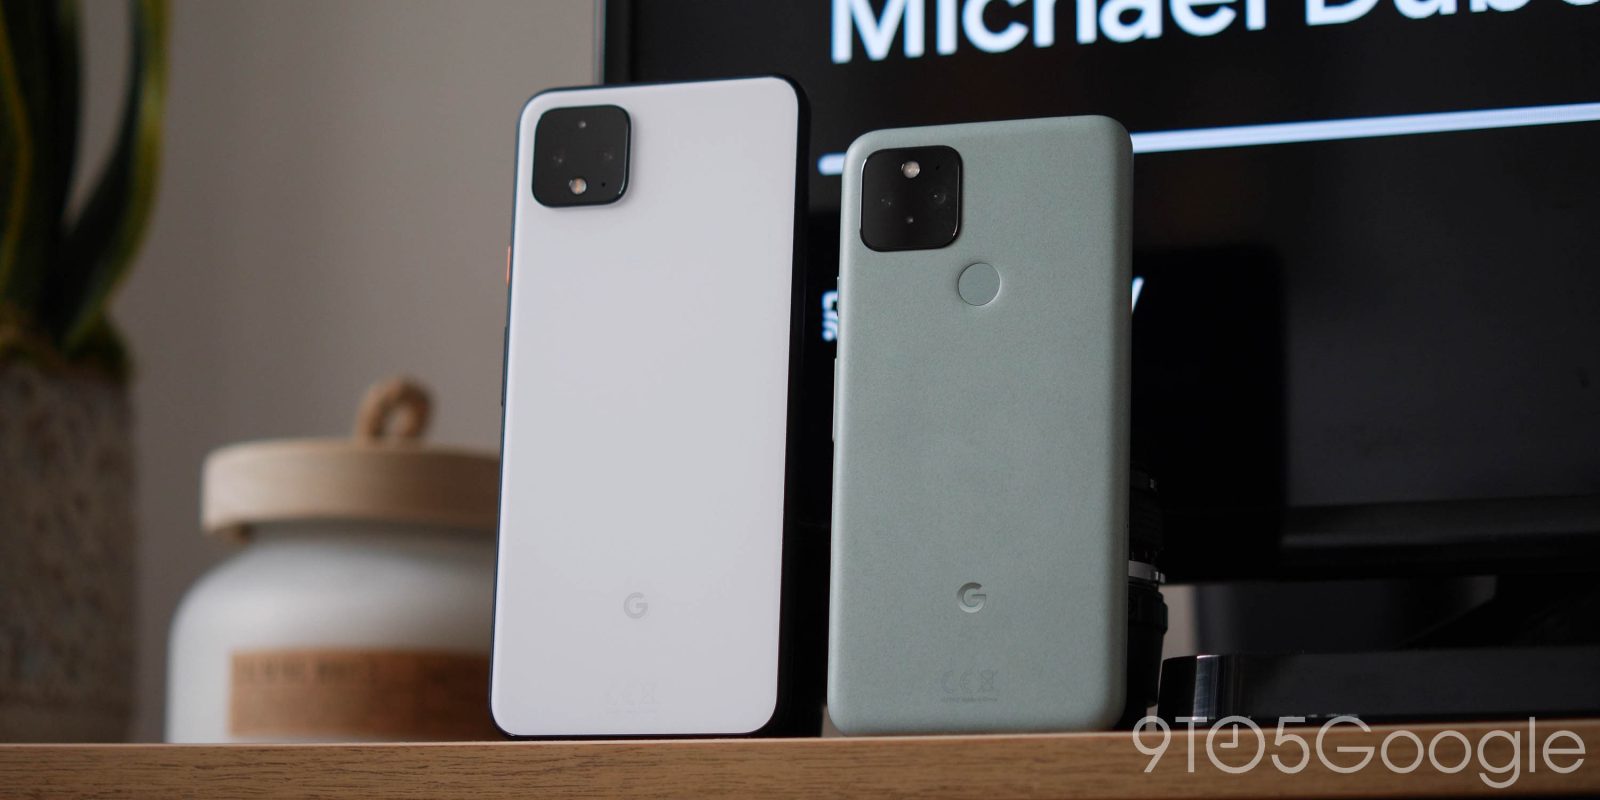 Google Pixel 4 vs Pixel 5: Worth the upgrade? [Video]